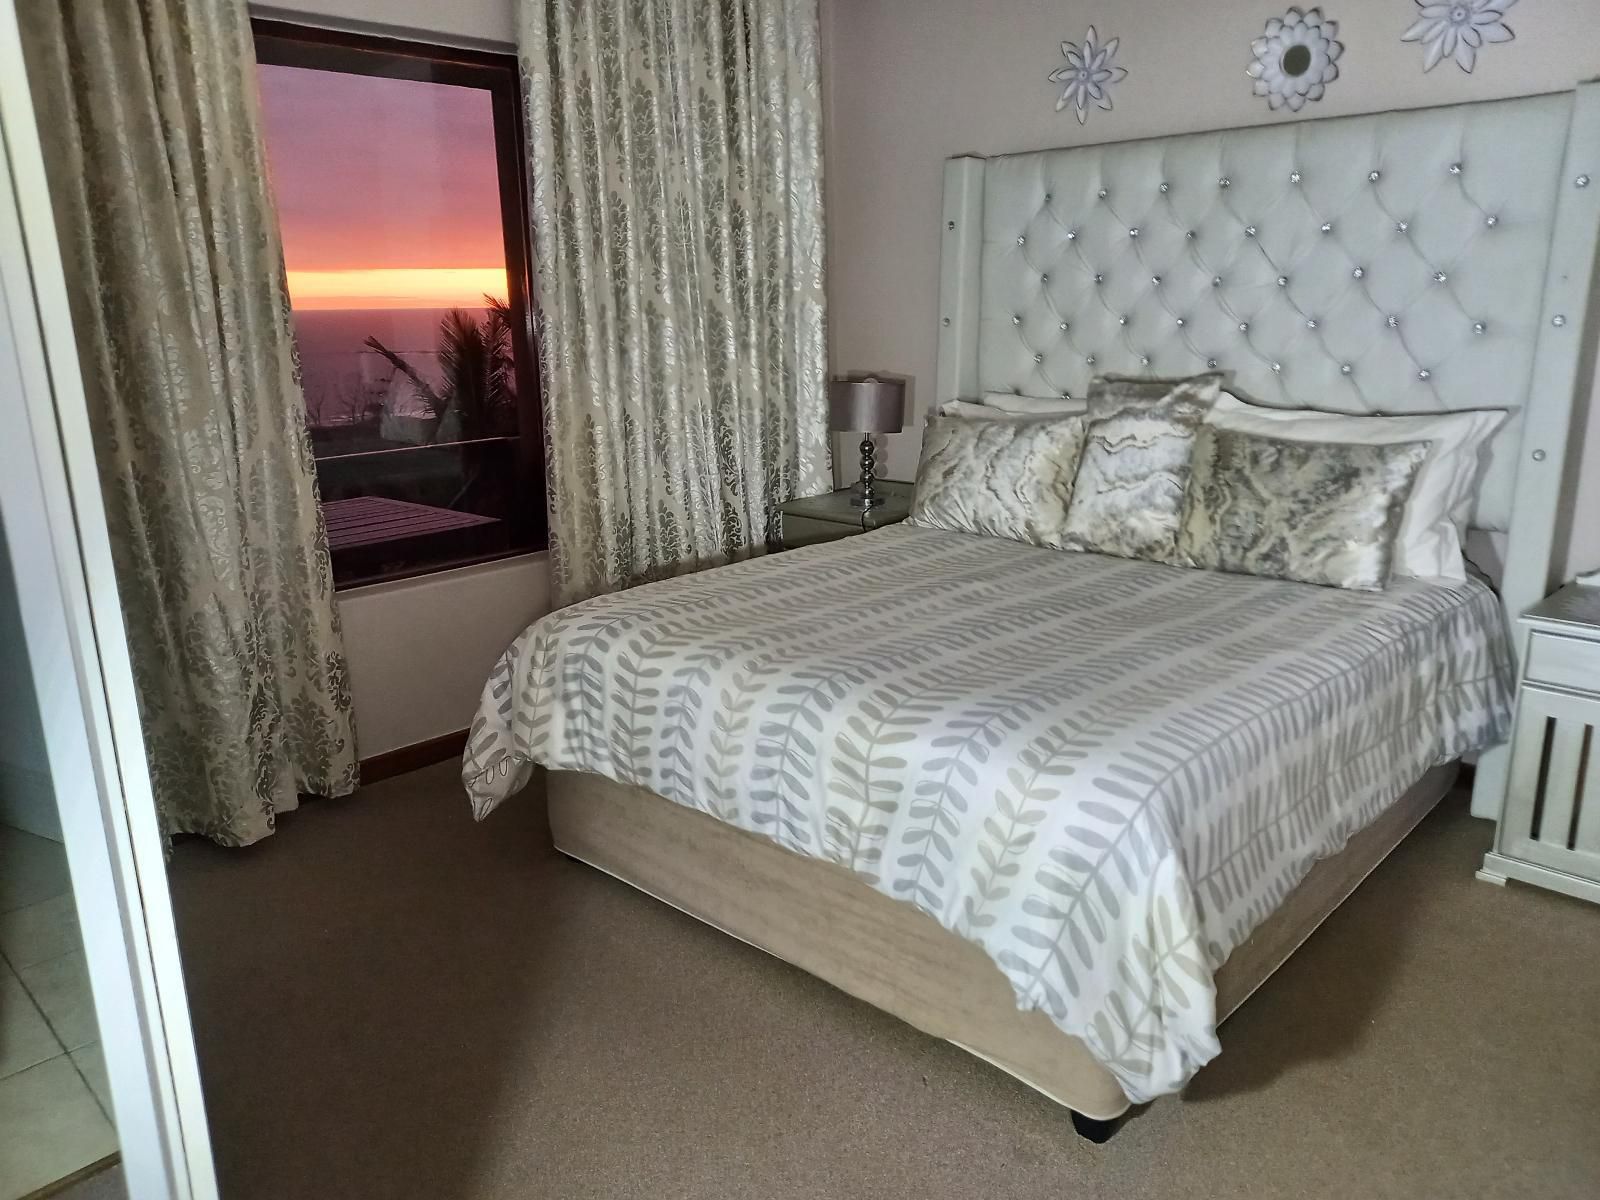 110Bayview Brenton On Sea Knysna Western Cape South Africa Bedroom, Sunset, Nature, Sky